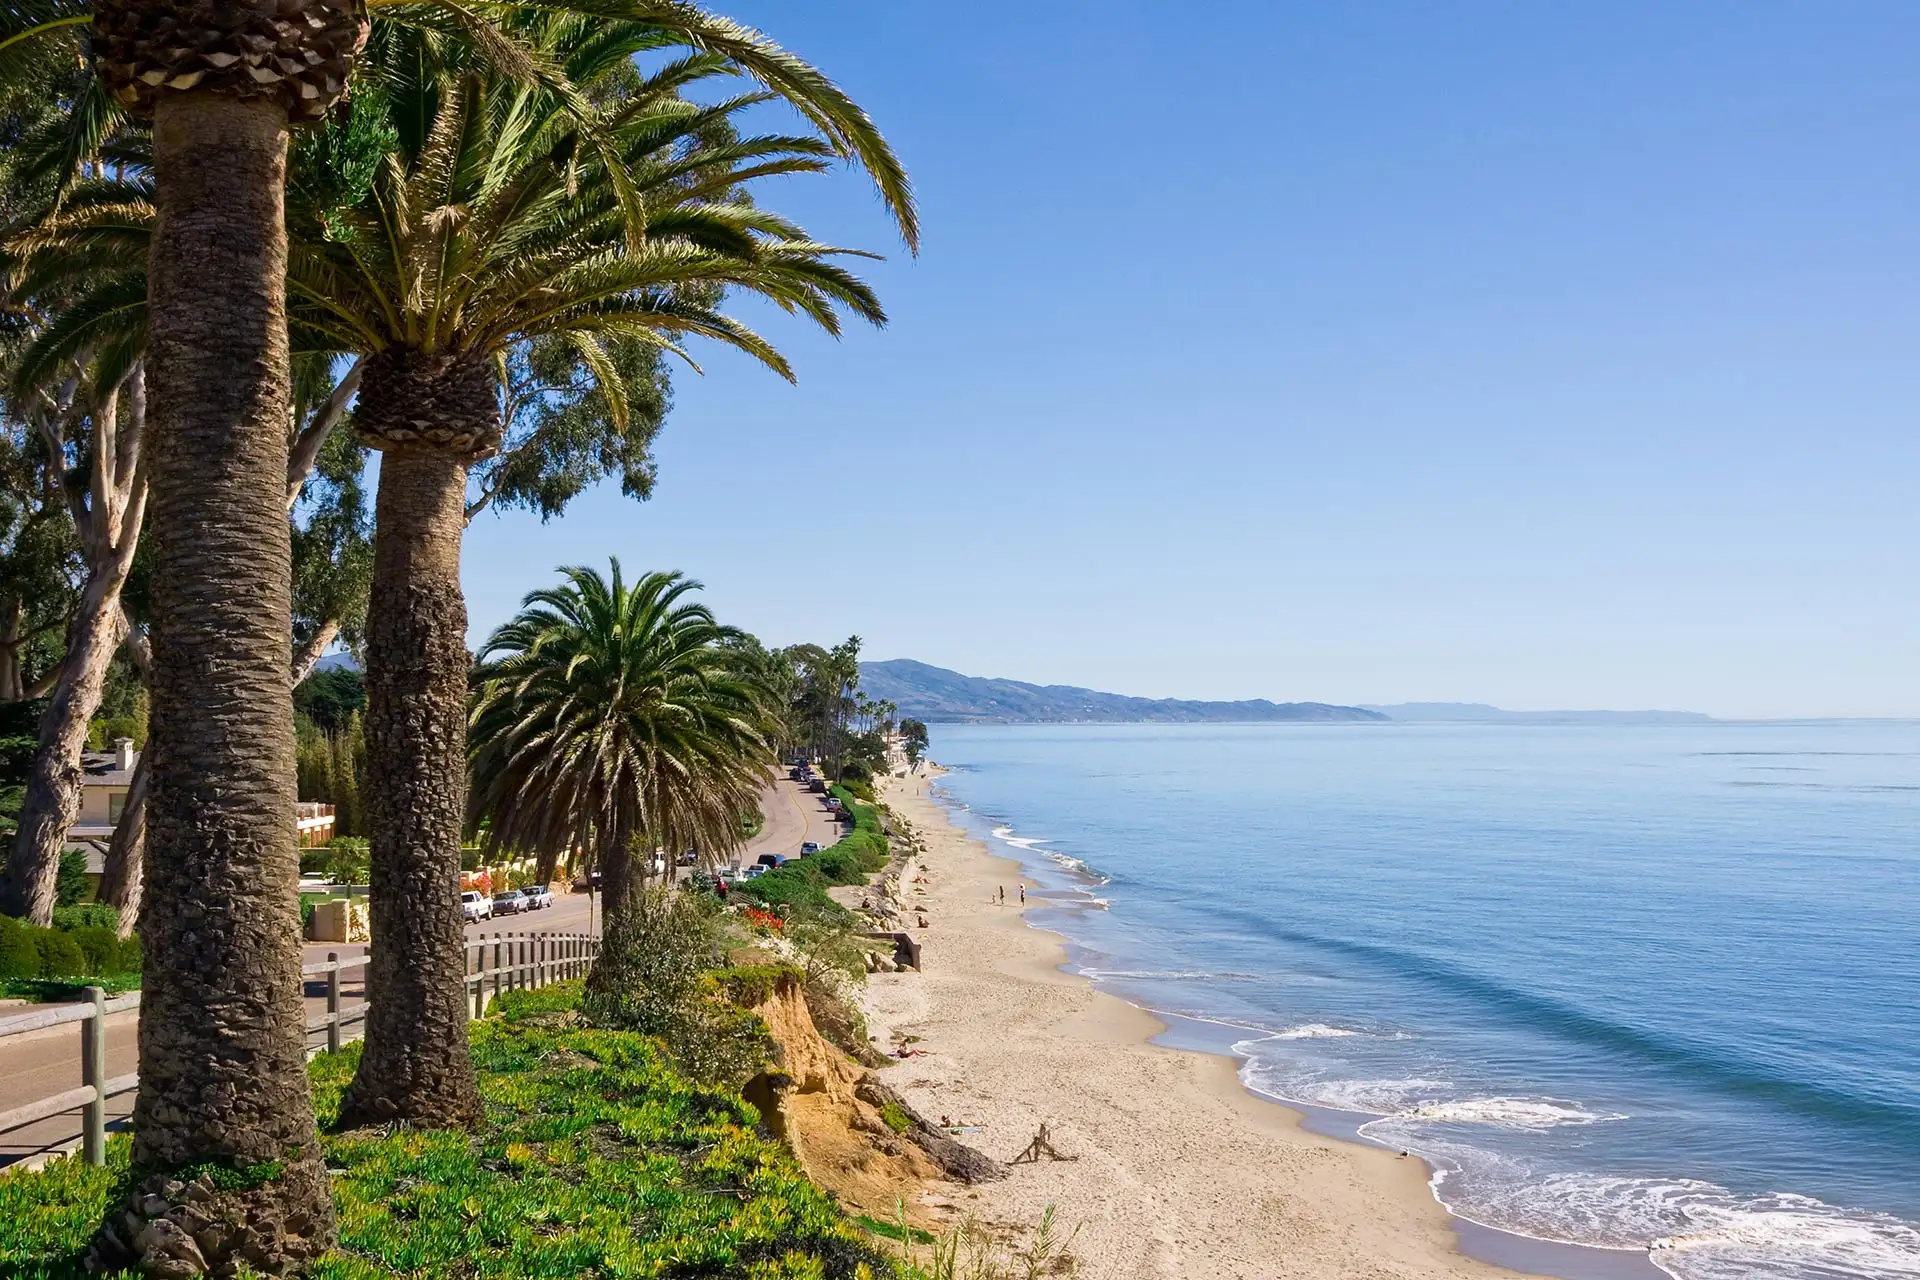 Santa Barbara, California; Photo Courtesy of David M. Schrader/Shutterstock.com